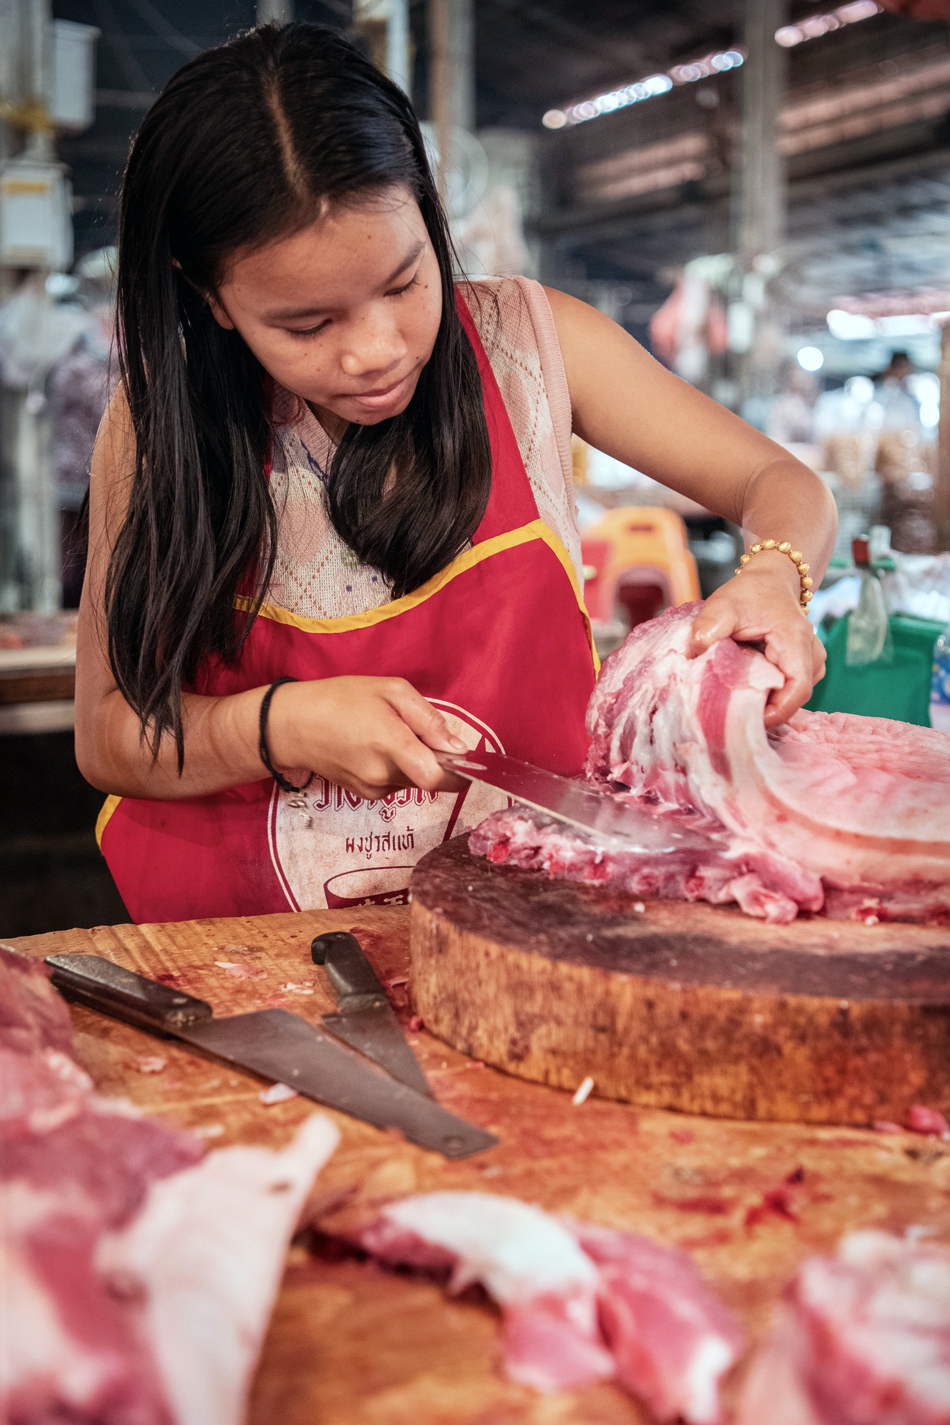 a woman cutting meat on a cutting board